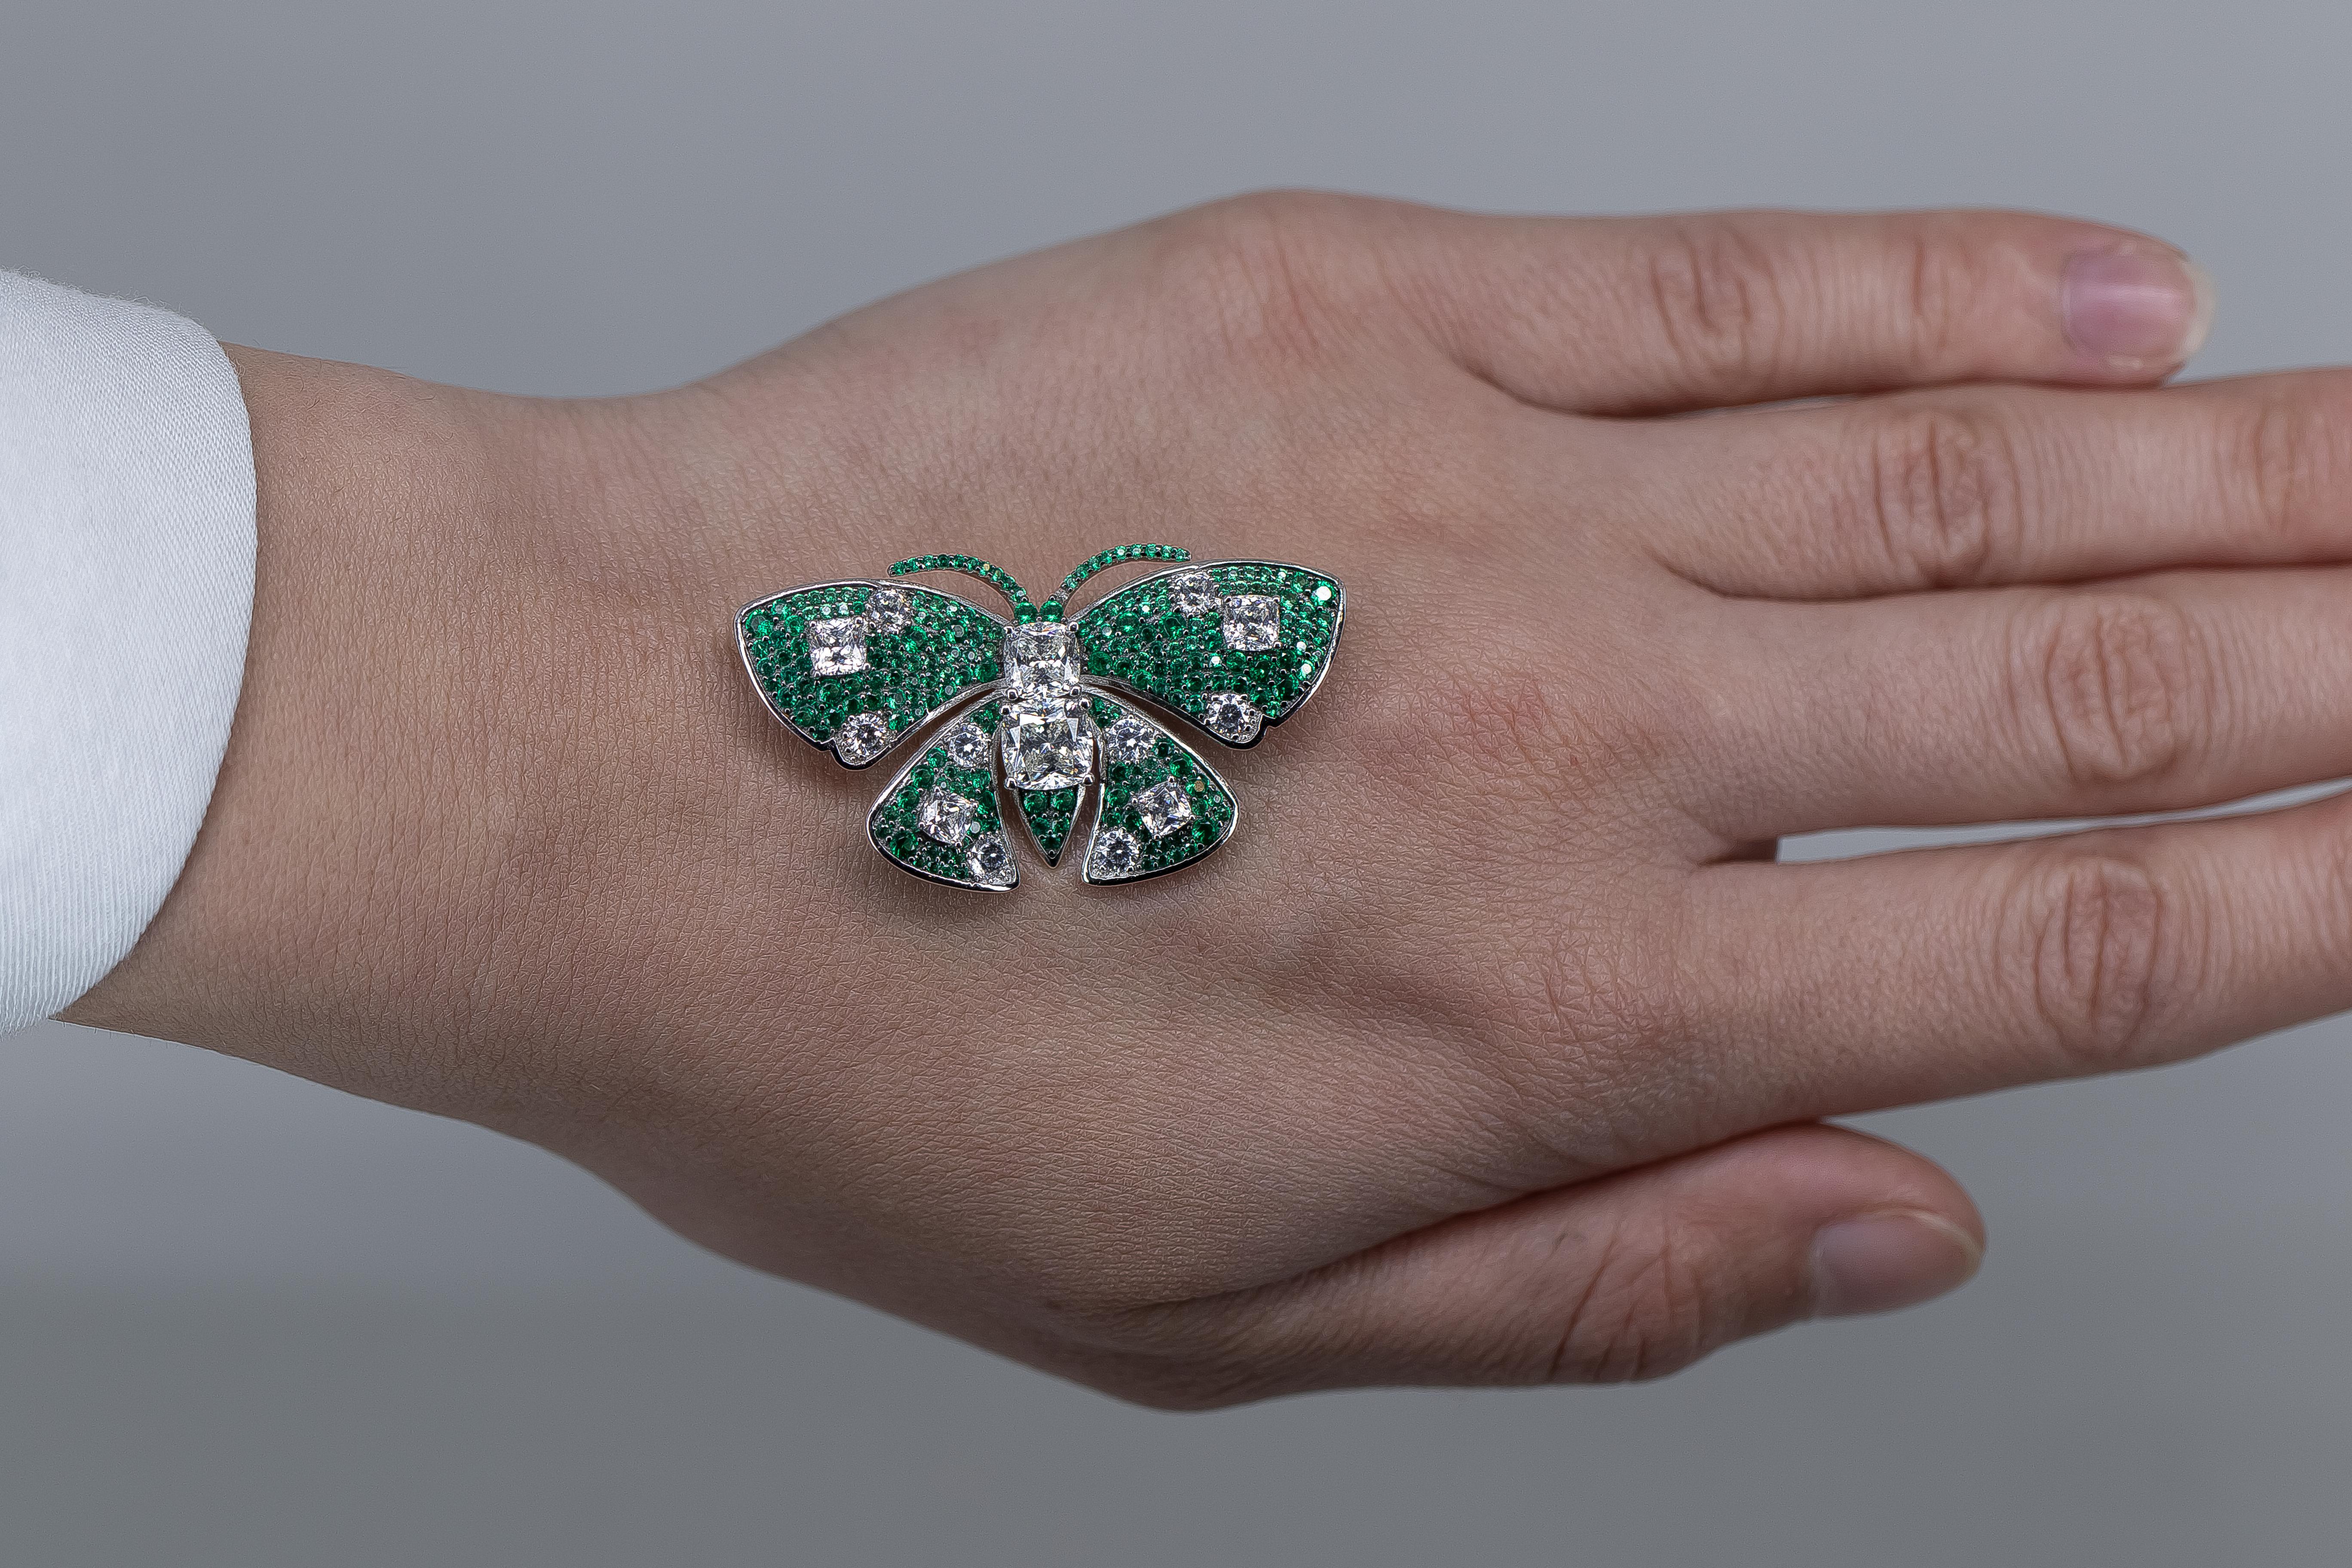 Hand Made Butterfly Brooch
Gemstone: AAA Grade Cubic Zirconia 
Metal: Rhodium on Sterling Silver
Style: Italian